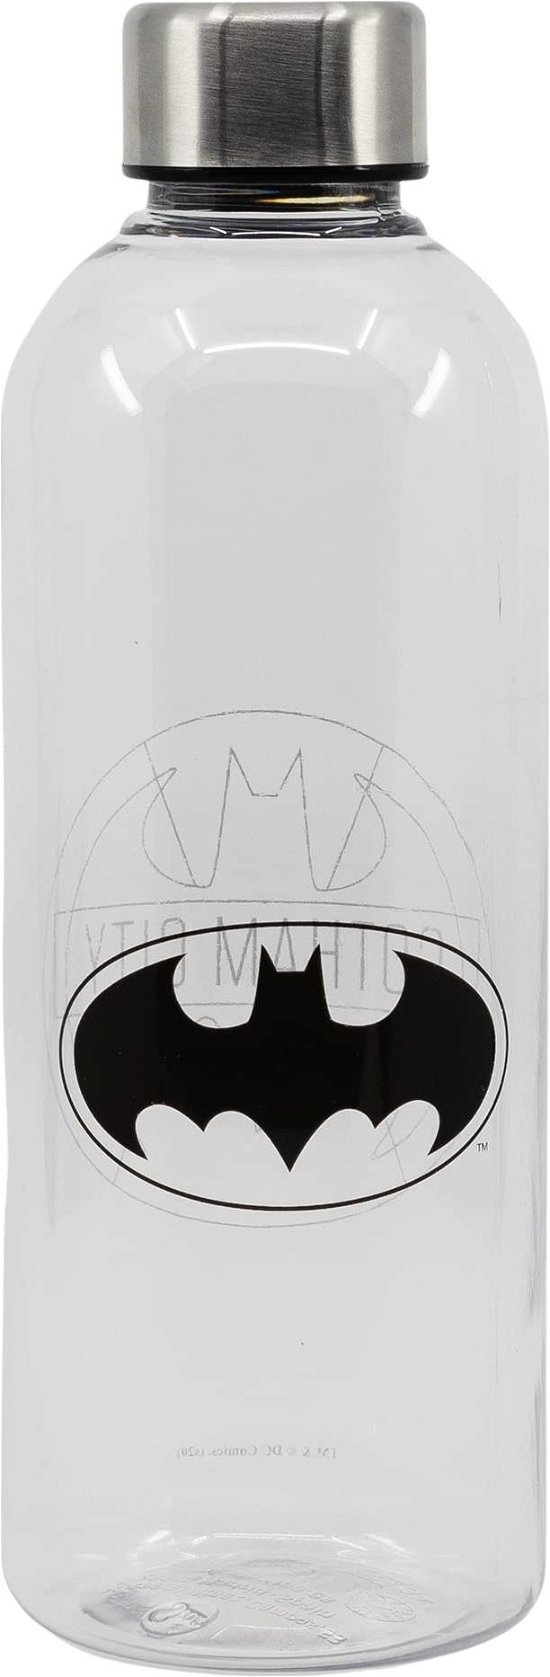 Plastic Bottle - Size 850ml - Batman - Merchandise -  - 8412497855650 - 